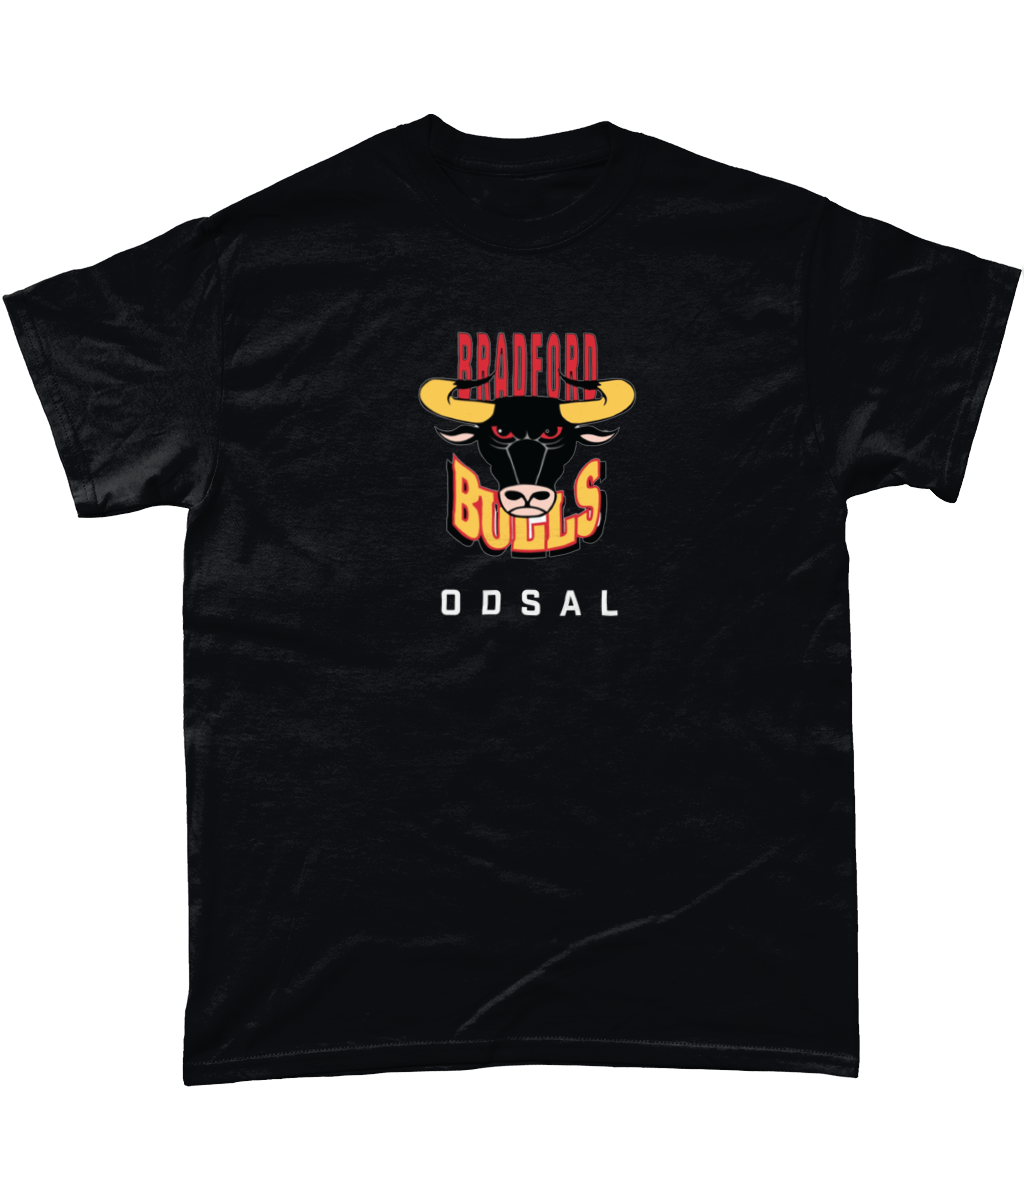 Bradford Bulls "Odsal" T-Shirt in Black